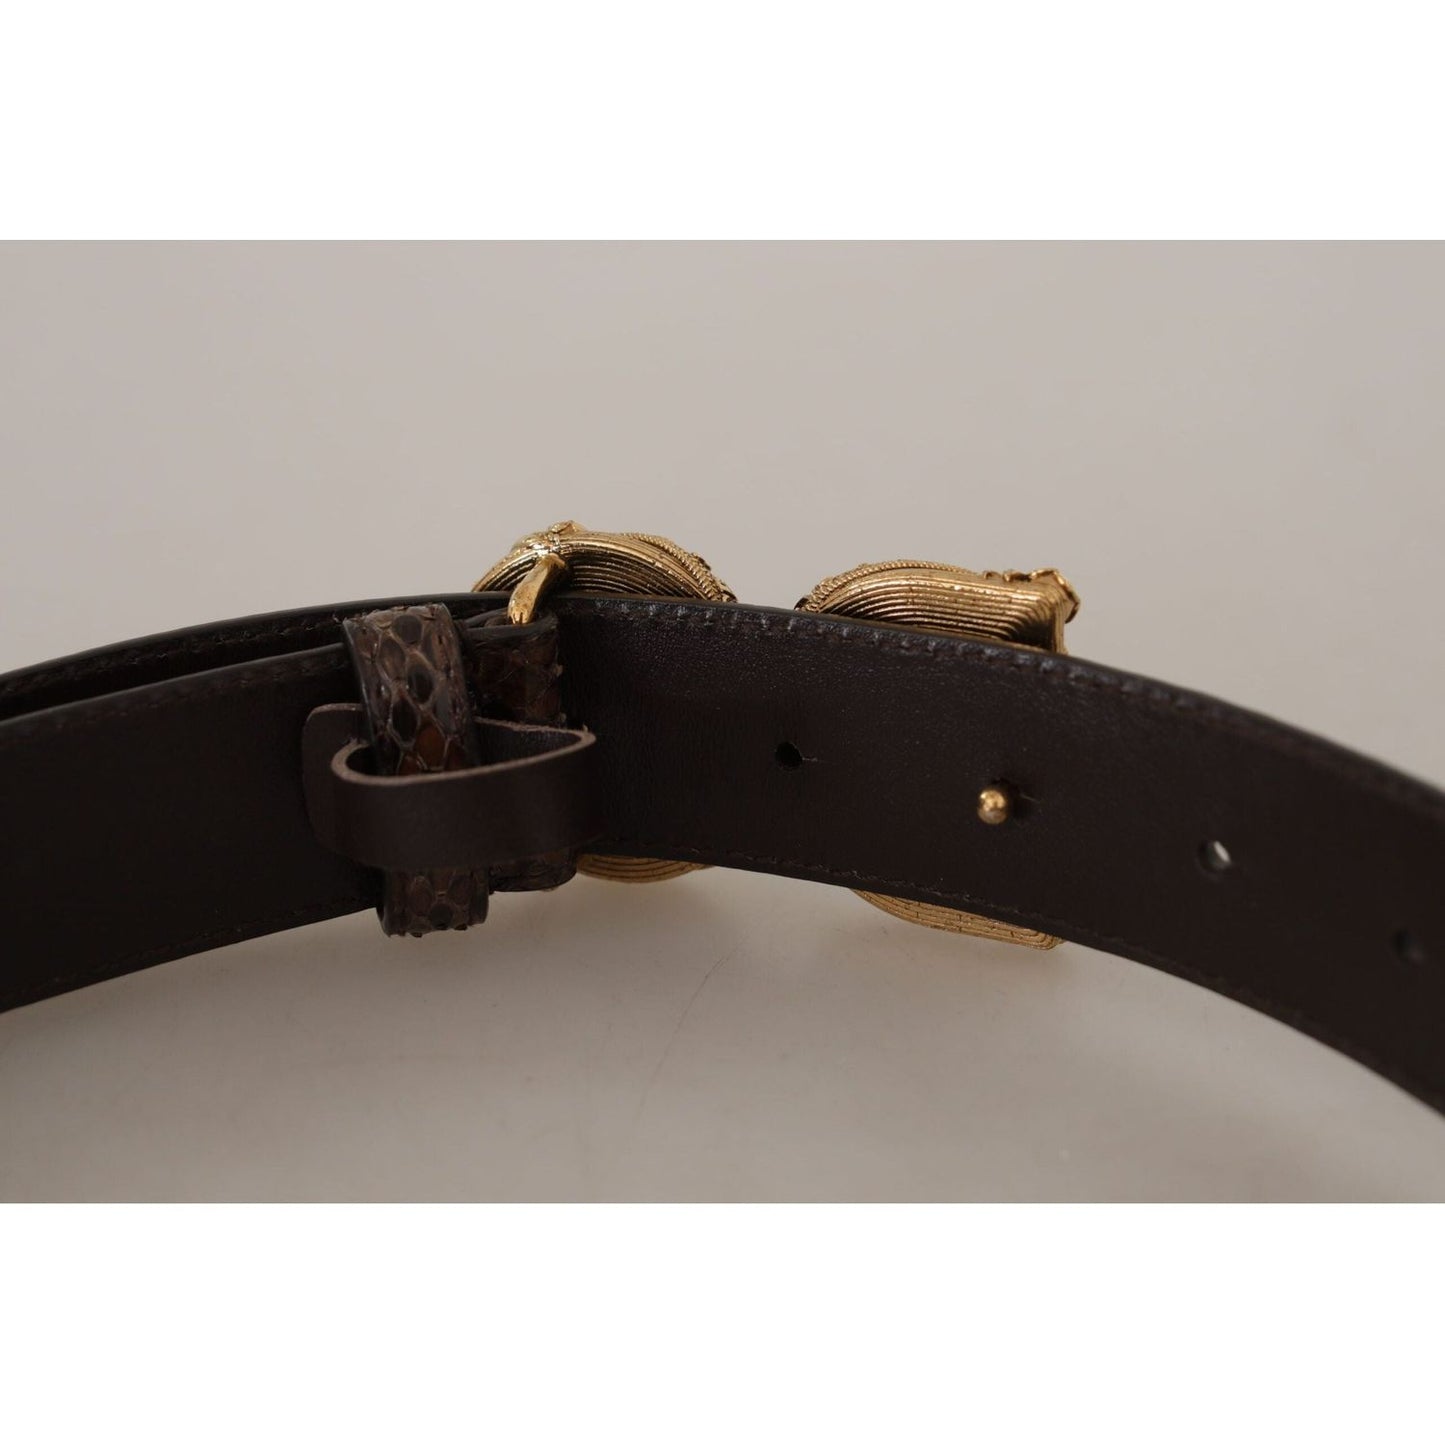 Dolce & Gabbana Elegant Snakeskin Leather Belt brown-amore-animal-print-exotic-leather-logo-buckle-belt IMG_8827-scaled-9e03e65c-0dd.jpg